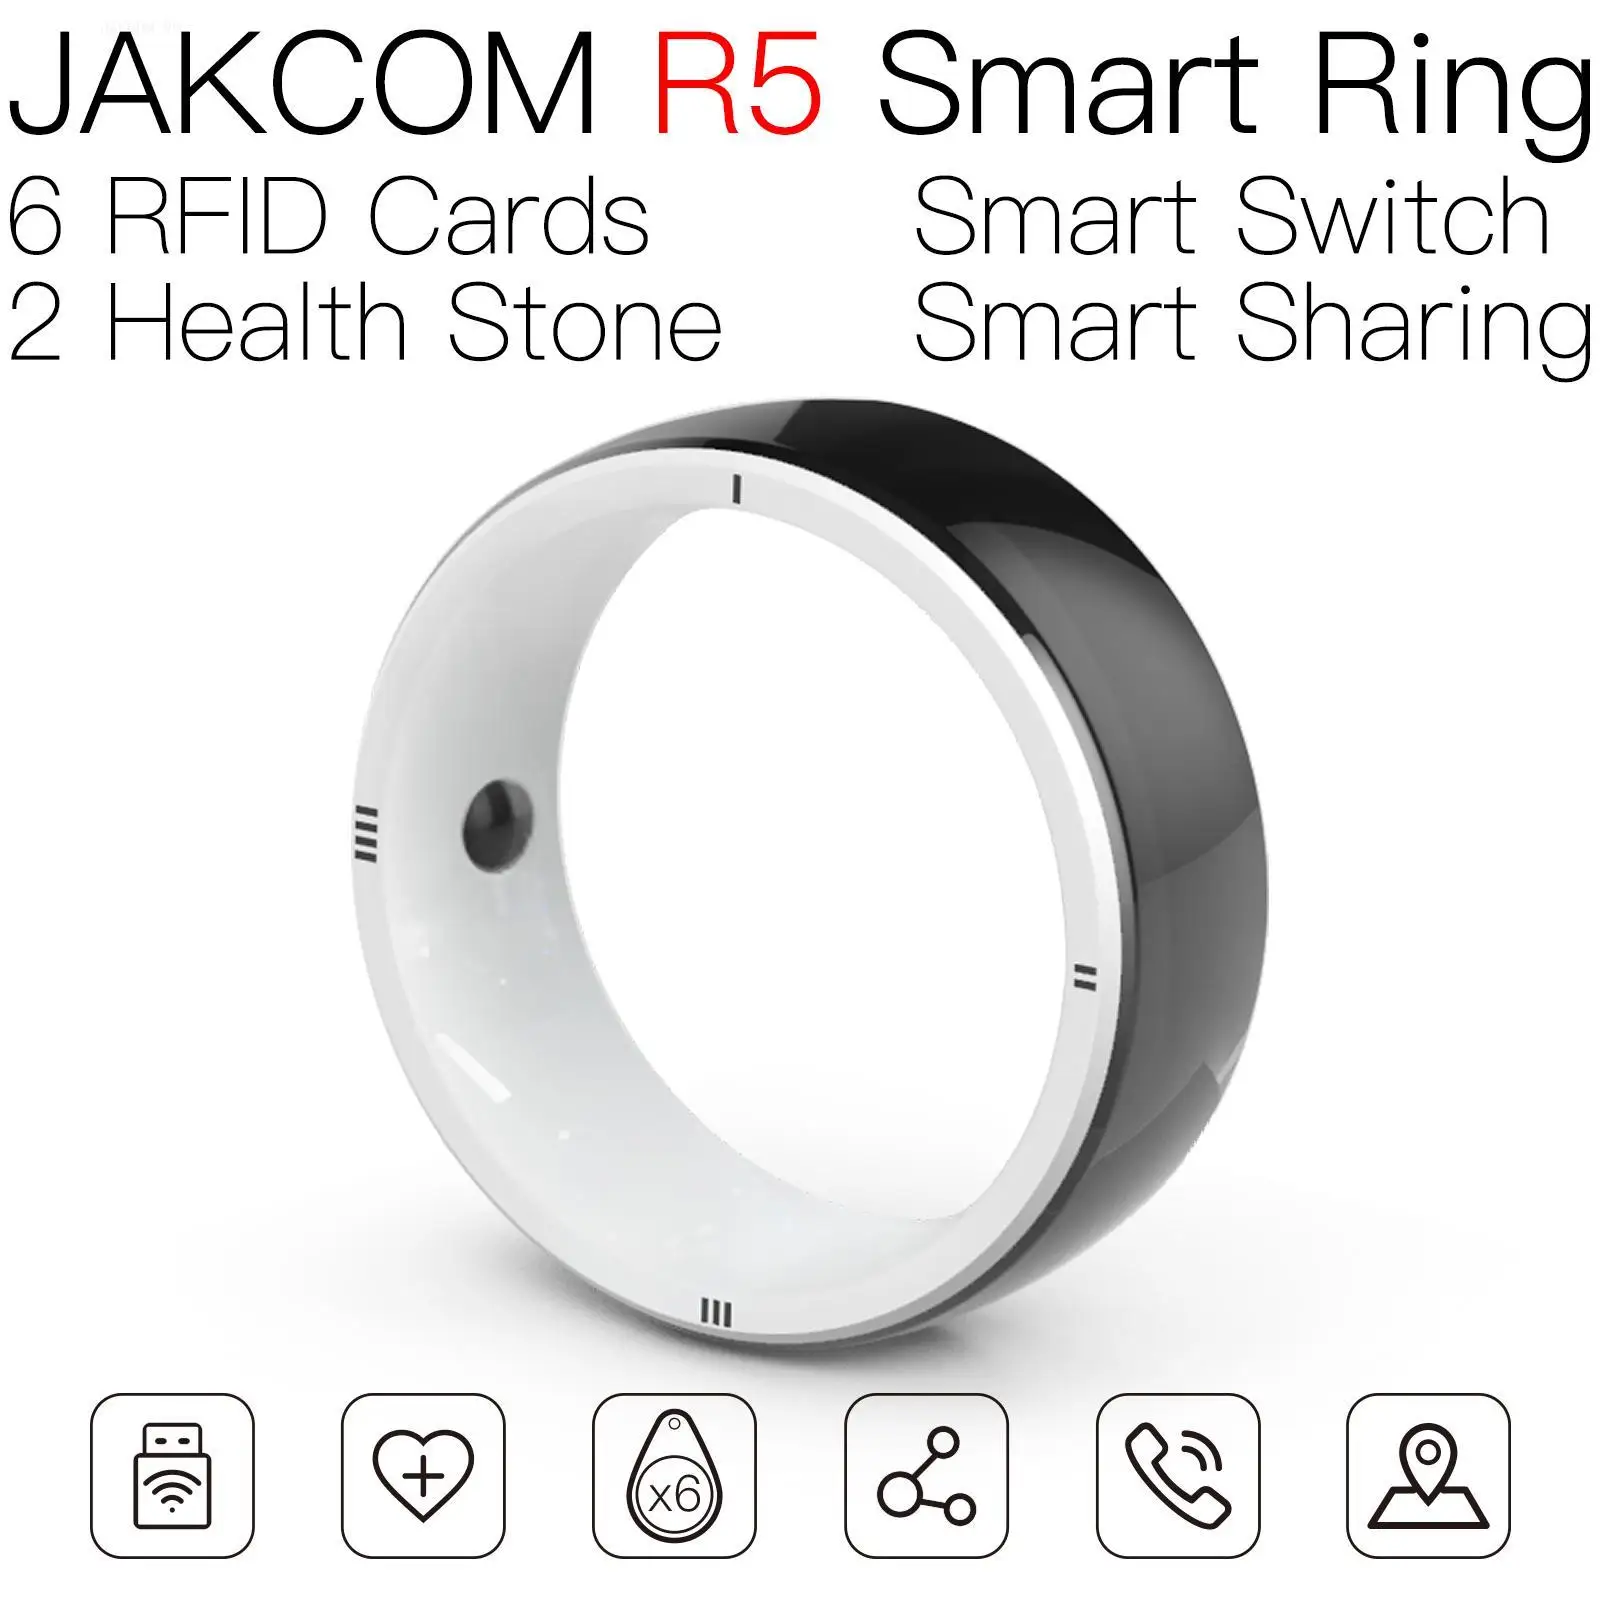 

JAKCOM R5 Smart Ring Super value as wish shopping schloss mhz rfid tag key rewritable black sticker tags card white jordan